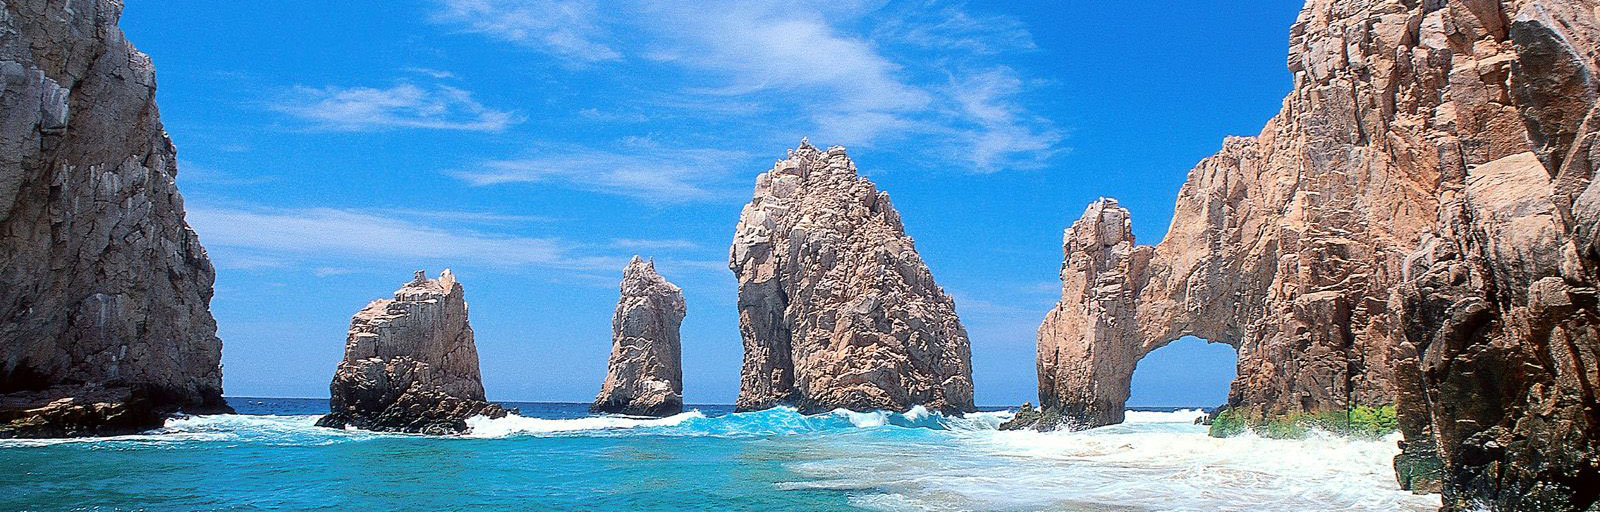 Baja Yoga Retreats in Mexico: Land's End - Cabo Arch